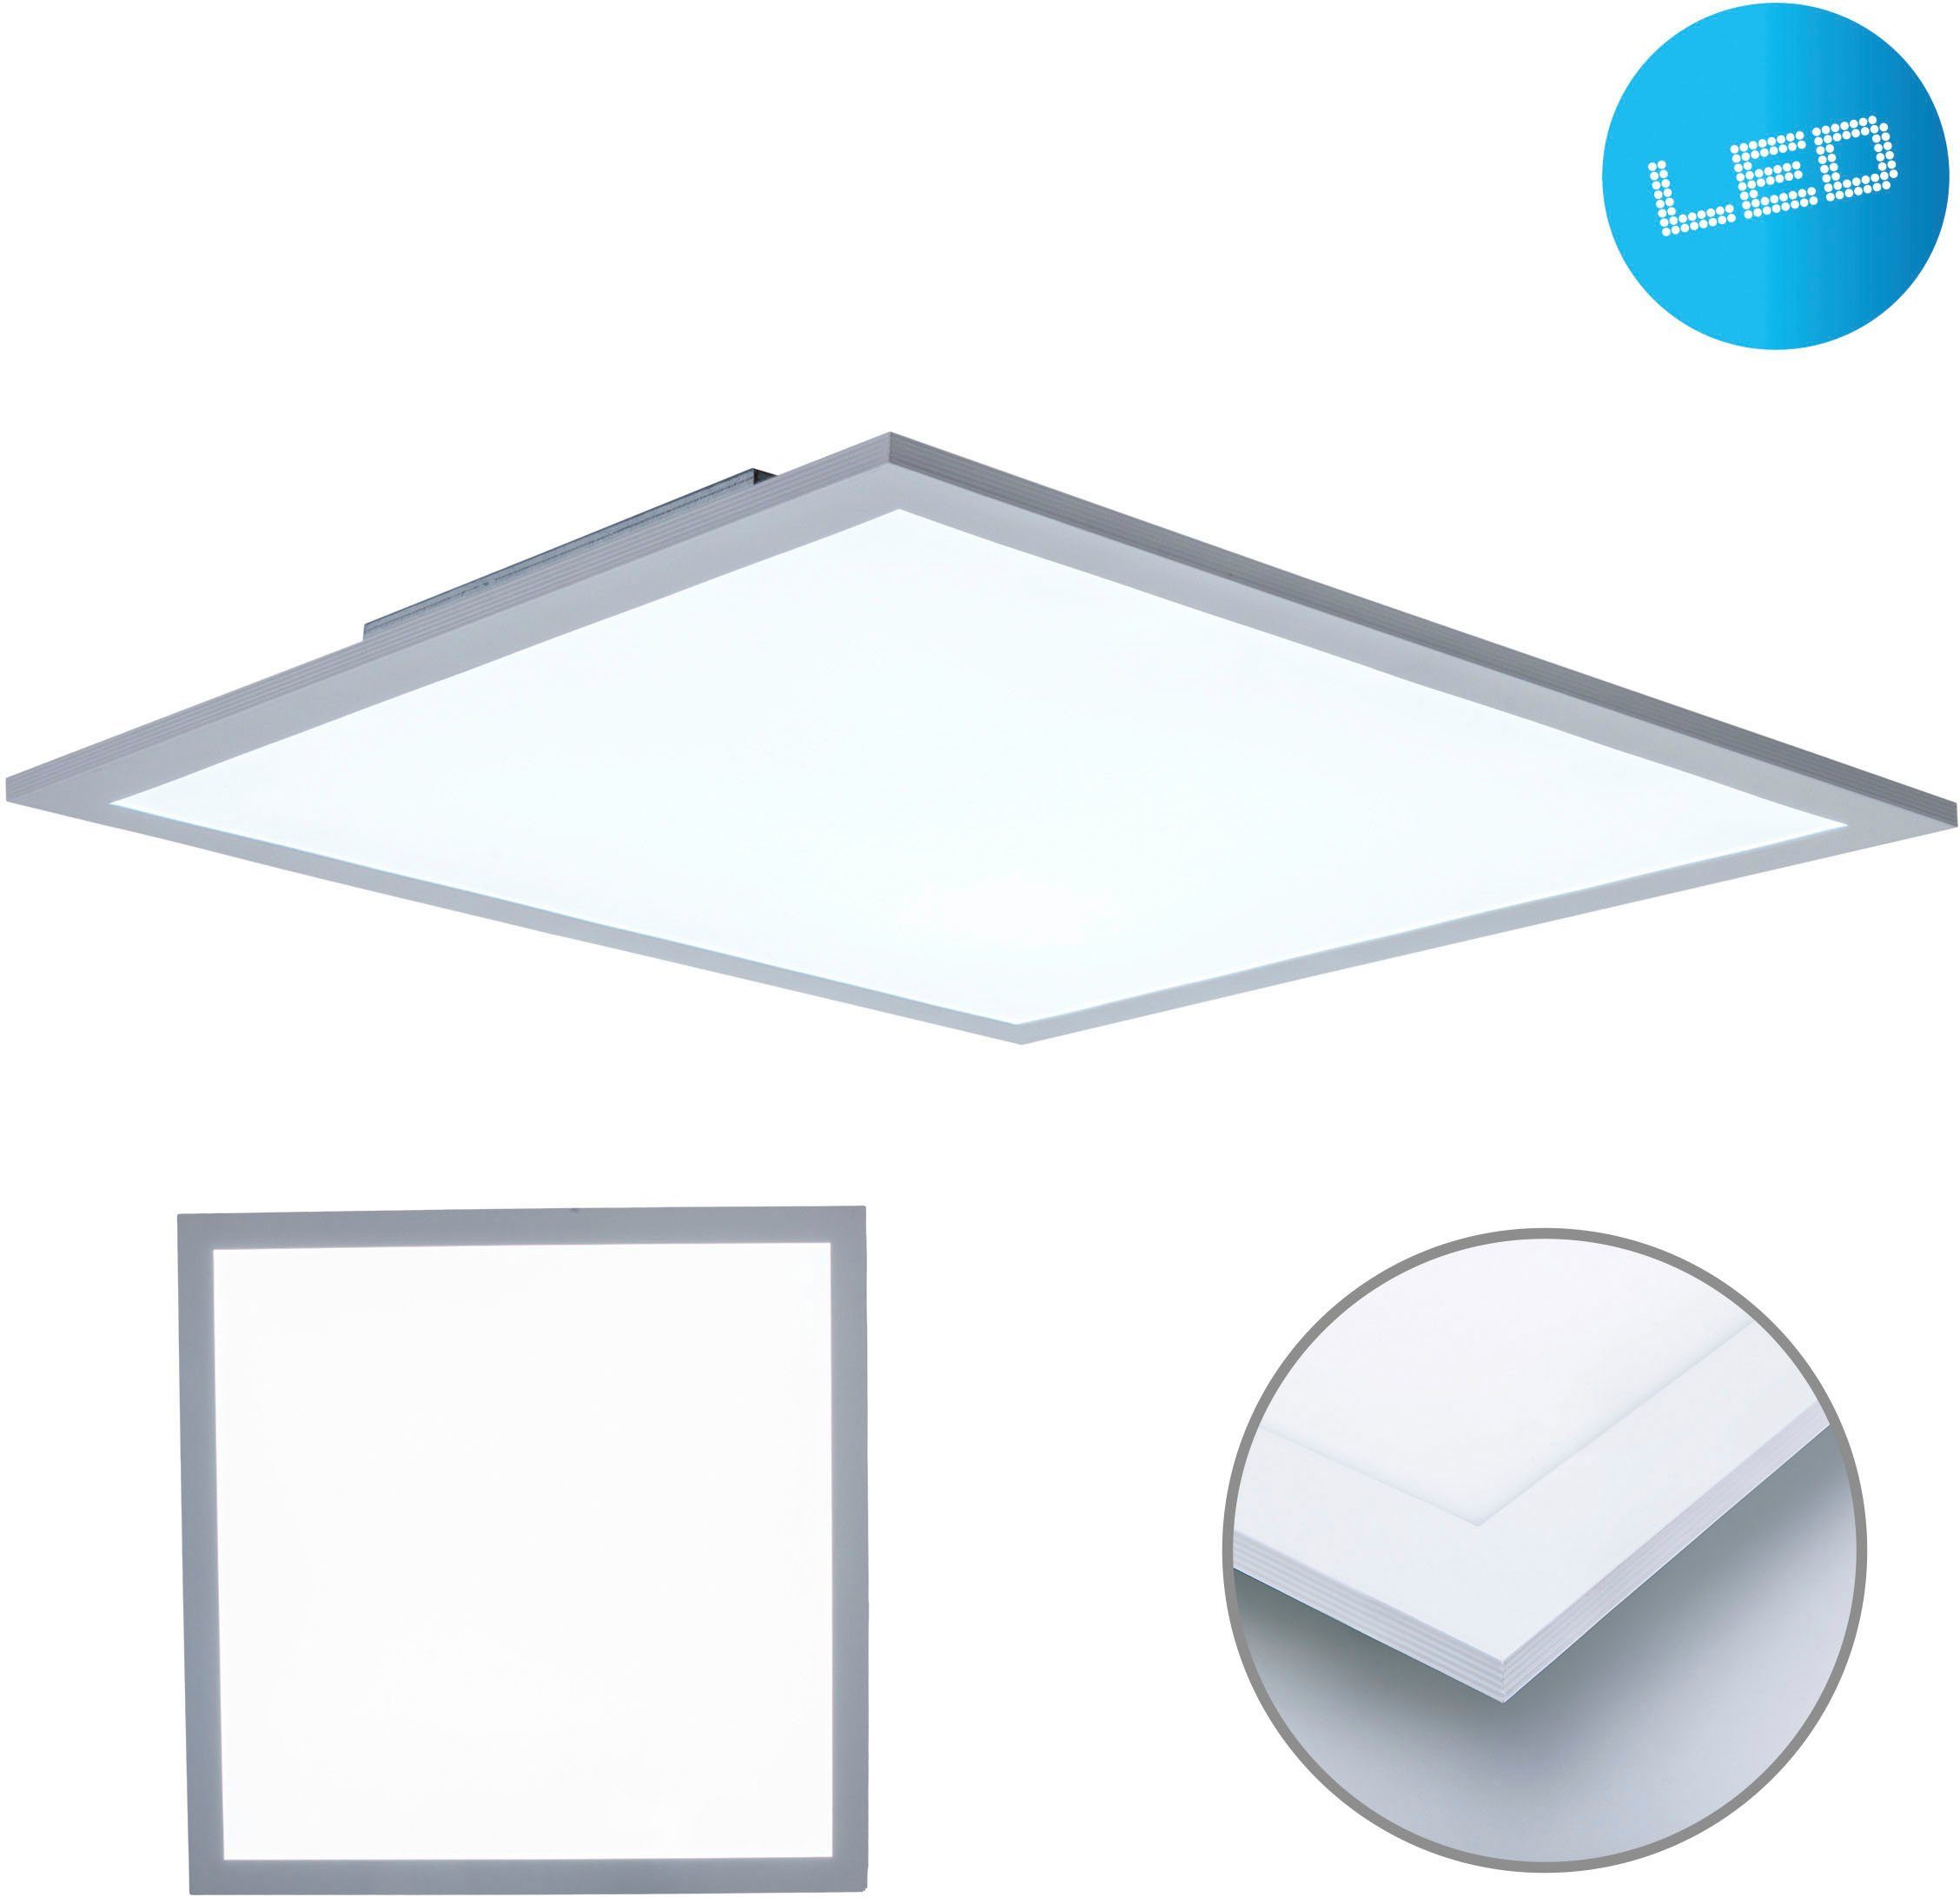 näve LED Panel Nicola, LED fest integriert, Neutralweiß, Aufbaupanel weiß  45x45cm, H: 6cm, 120 LED, Lichtfarbe neutralweiß